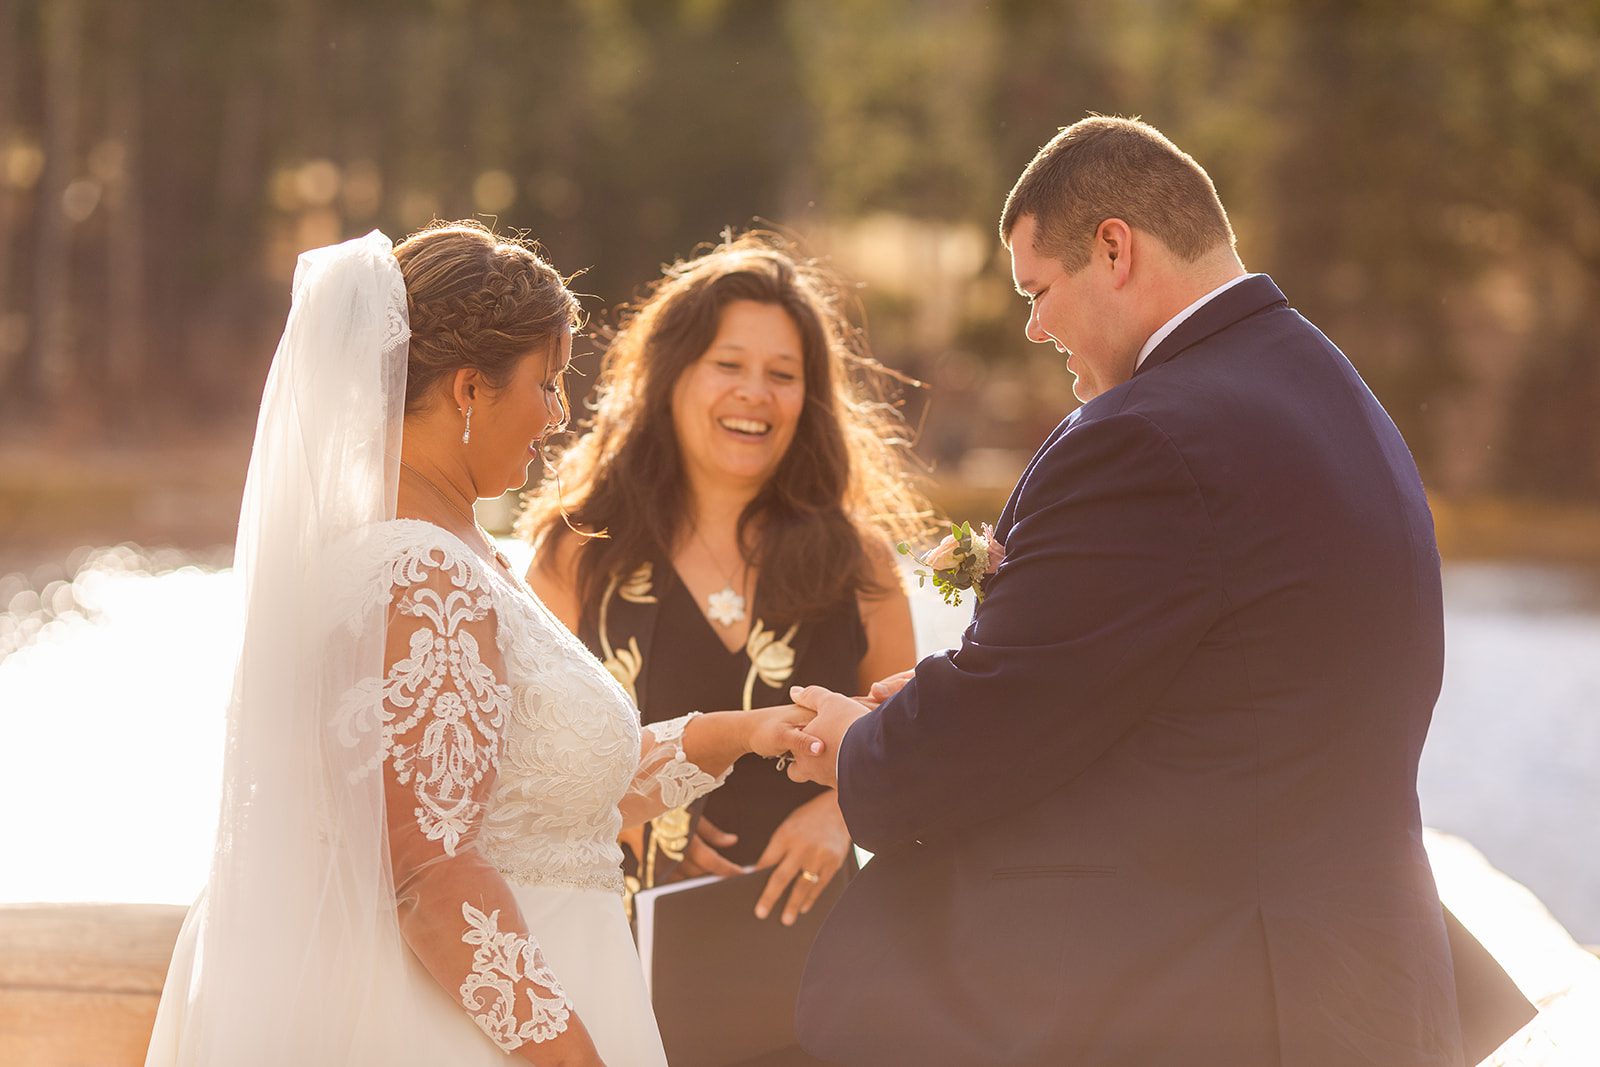 groom slides ring no his brides finger during Fall elopement ceremony at Sprague Lake. 